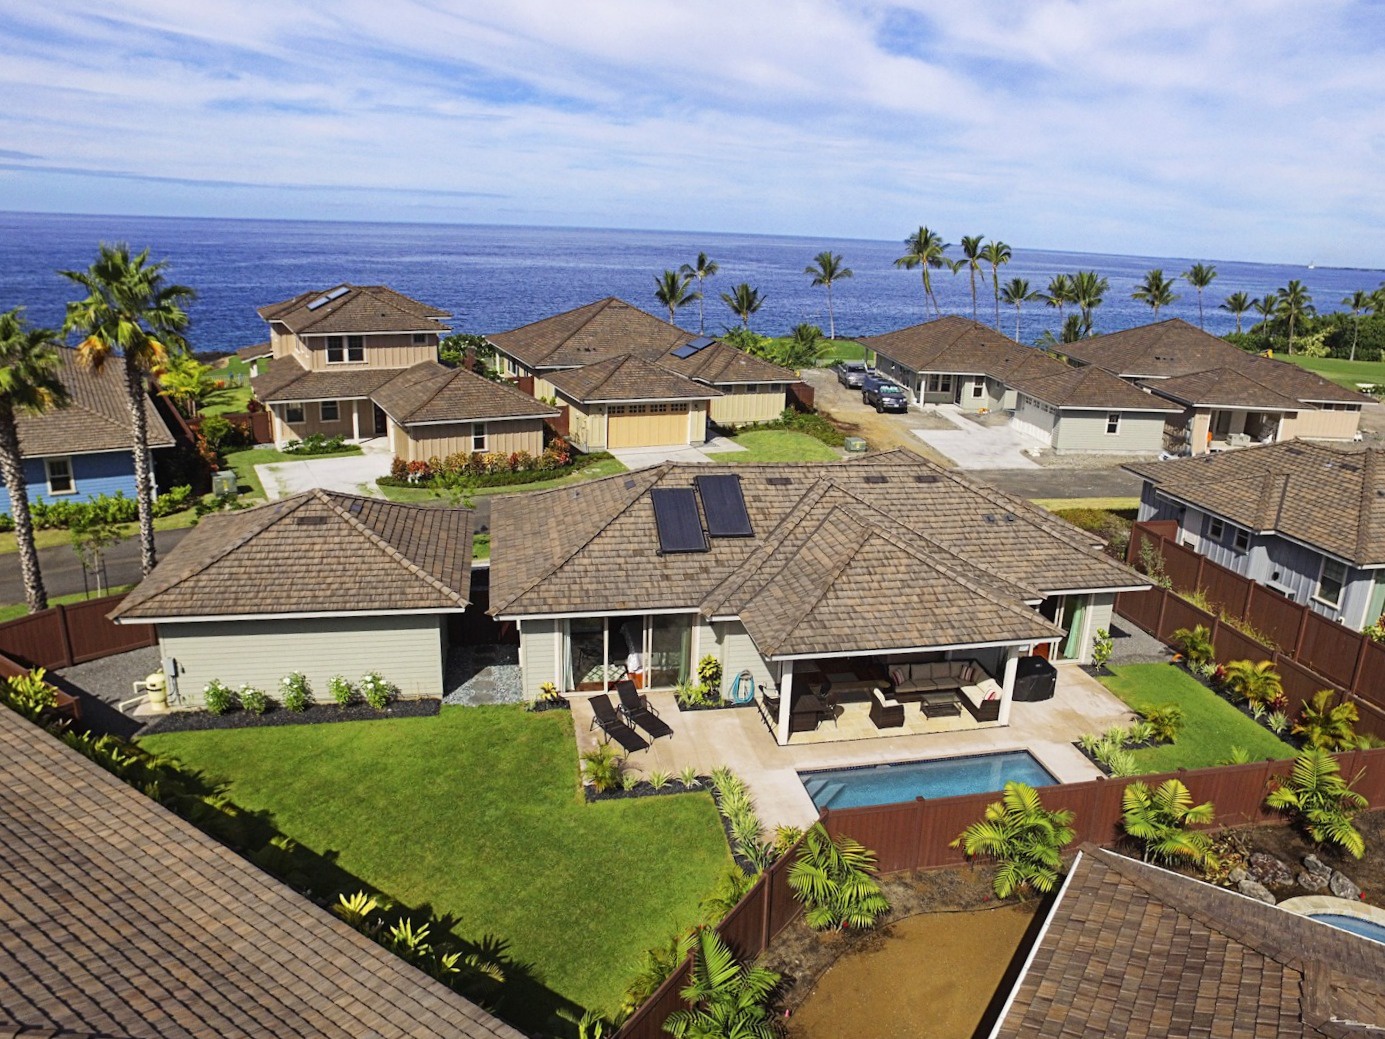 Kailua Kona Vacation Rentals, Holua Kai #32 - Aerial view of the home